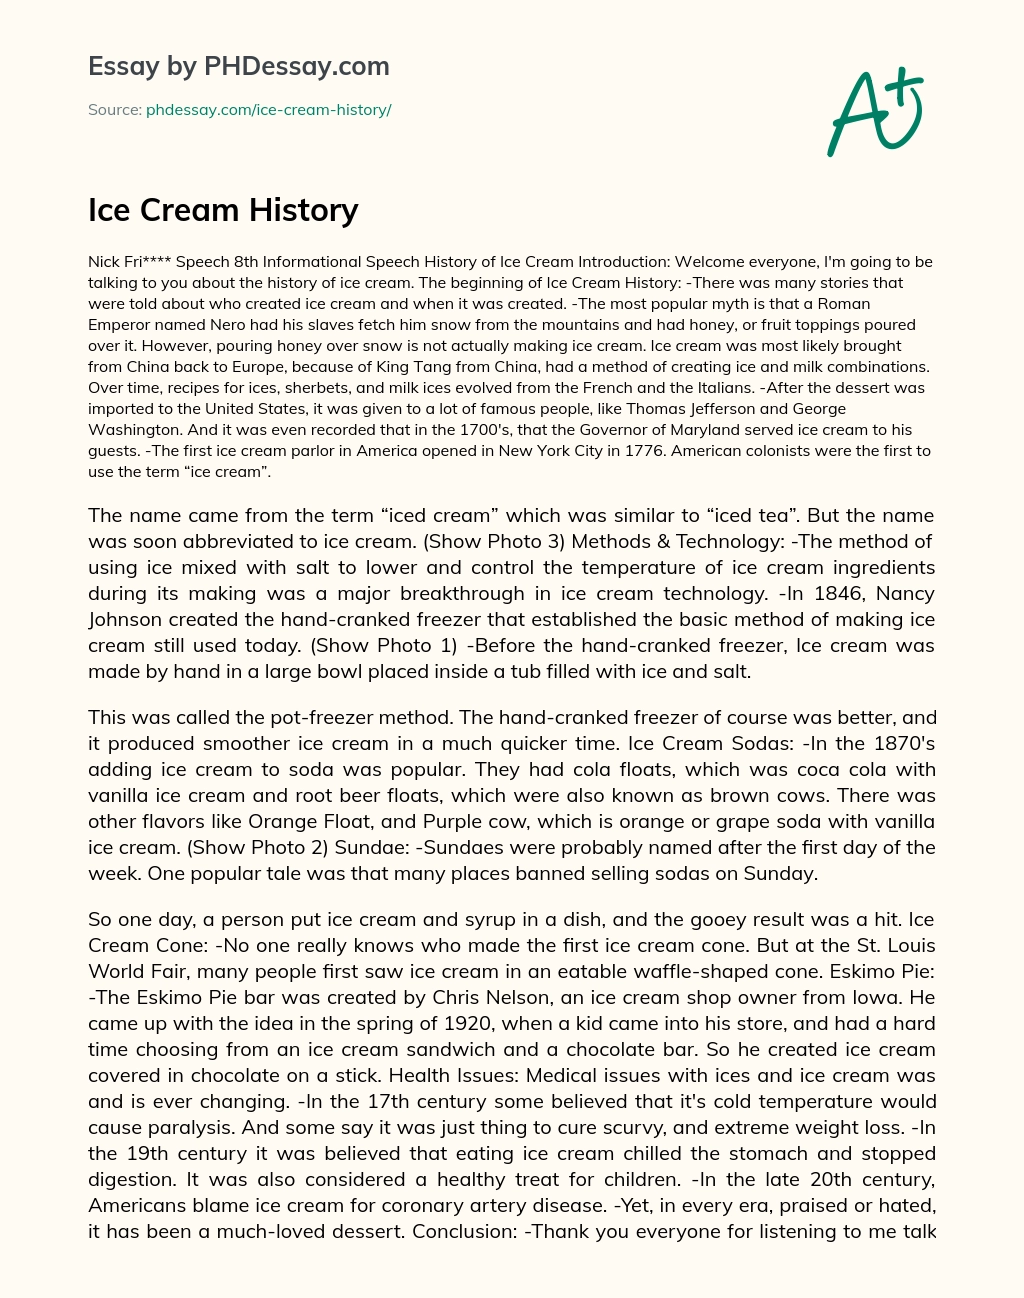 Ice Cream History essay